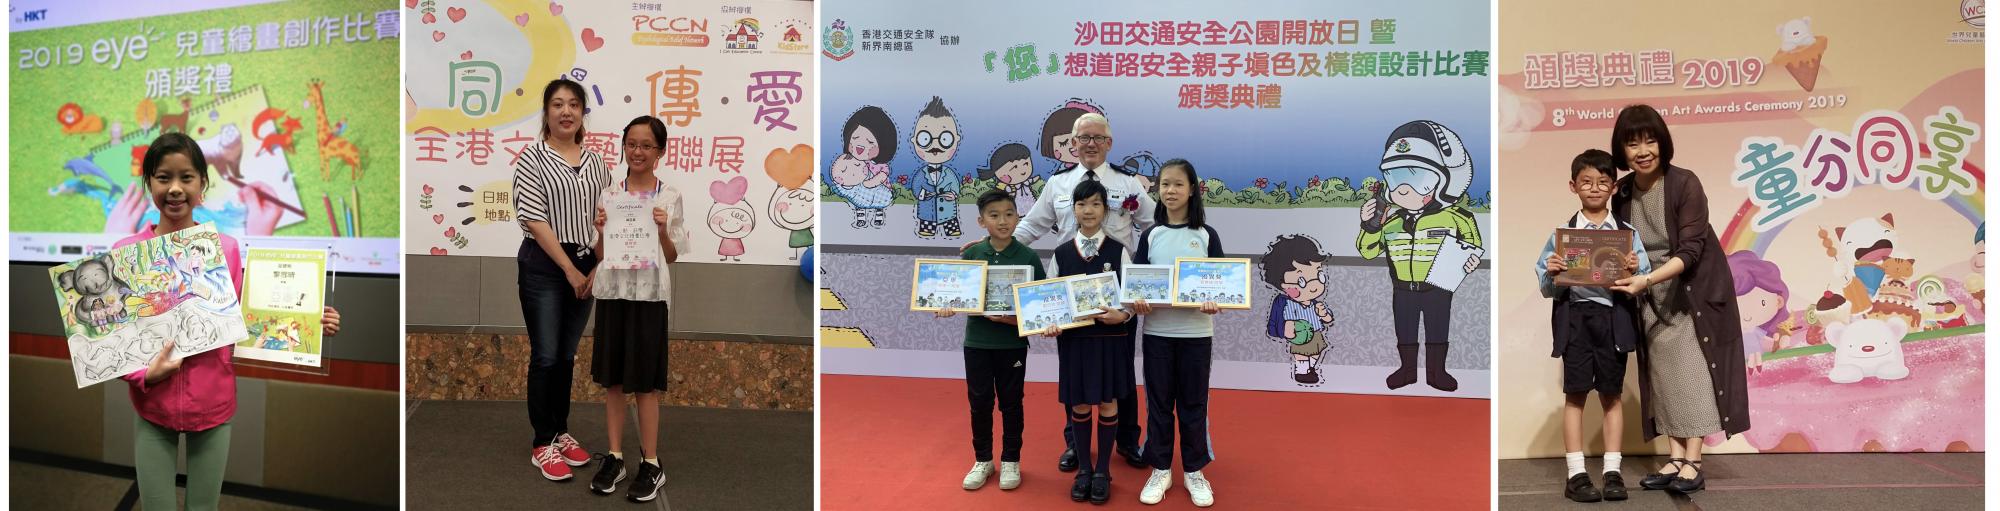 Students received awards in several Hong Kong visual arts competitions